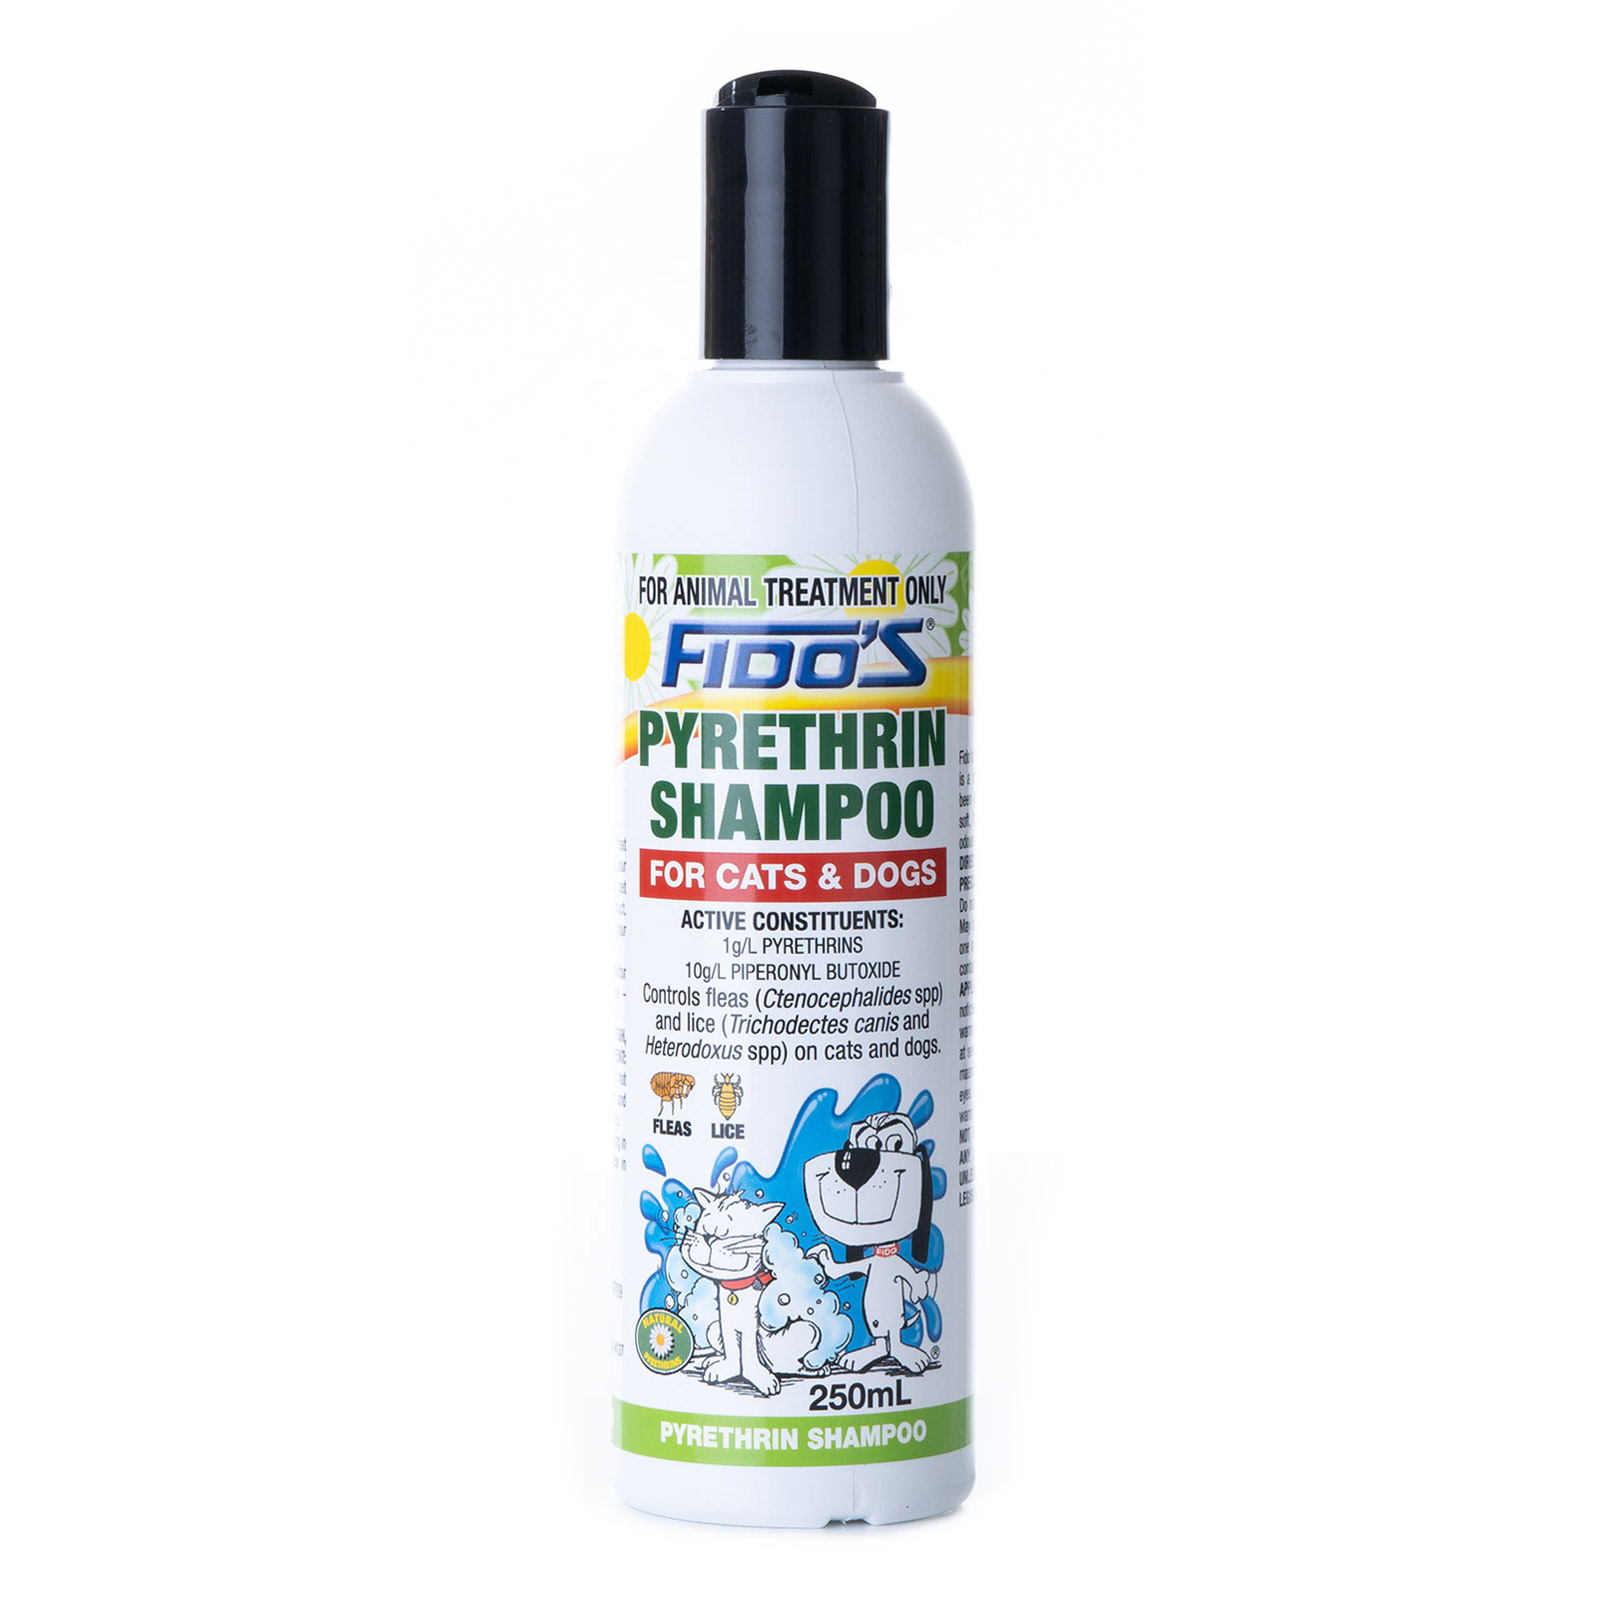 Fido's Pyrethrin Shampoo for Dogs